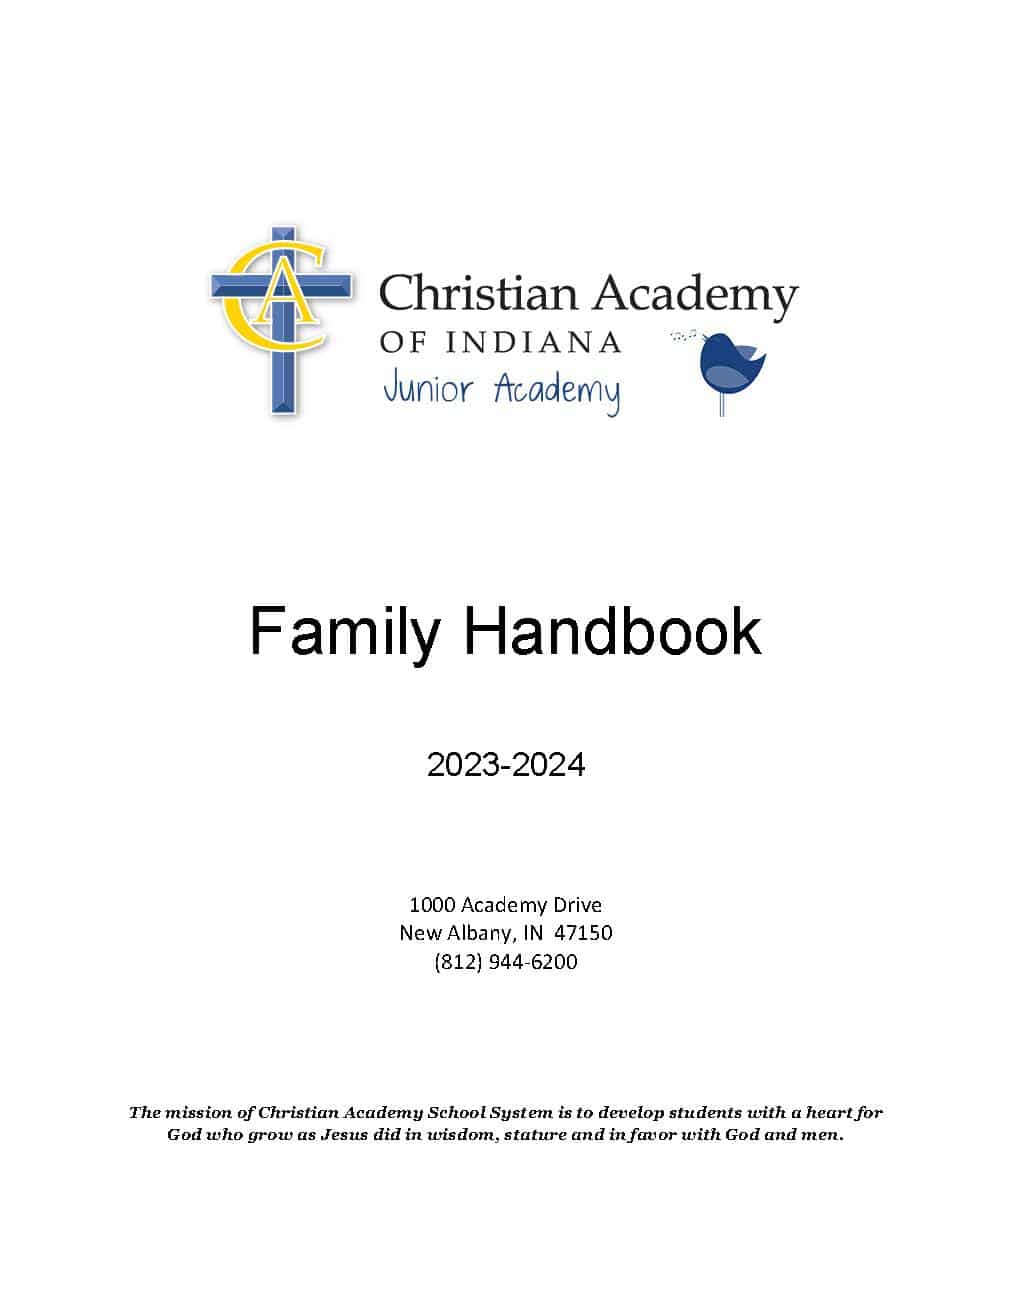 Christian Academy School System | Christian Academy of Indiana Junior Academy | 2023-2024 Handbook